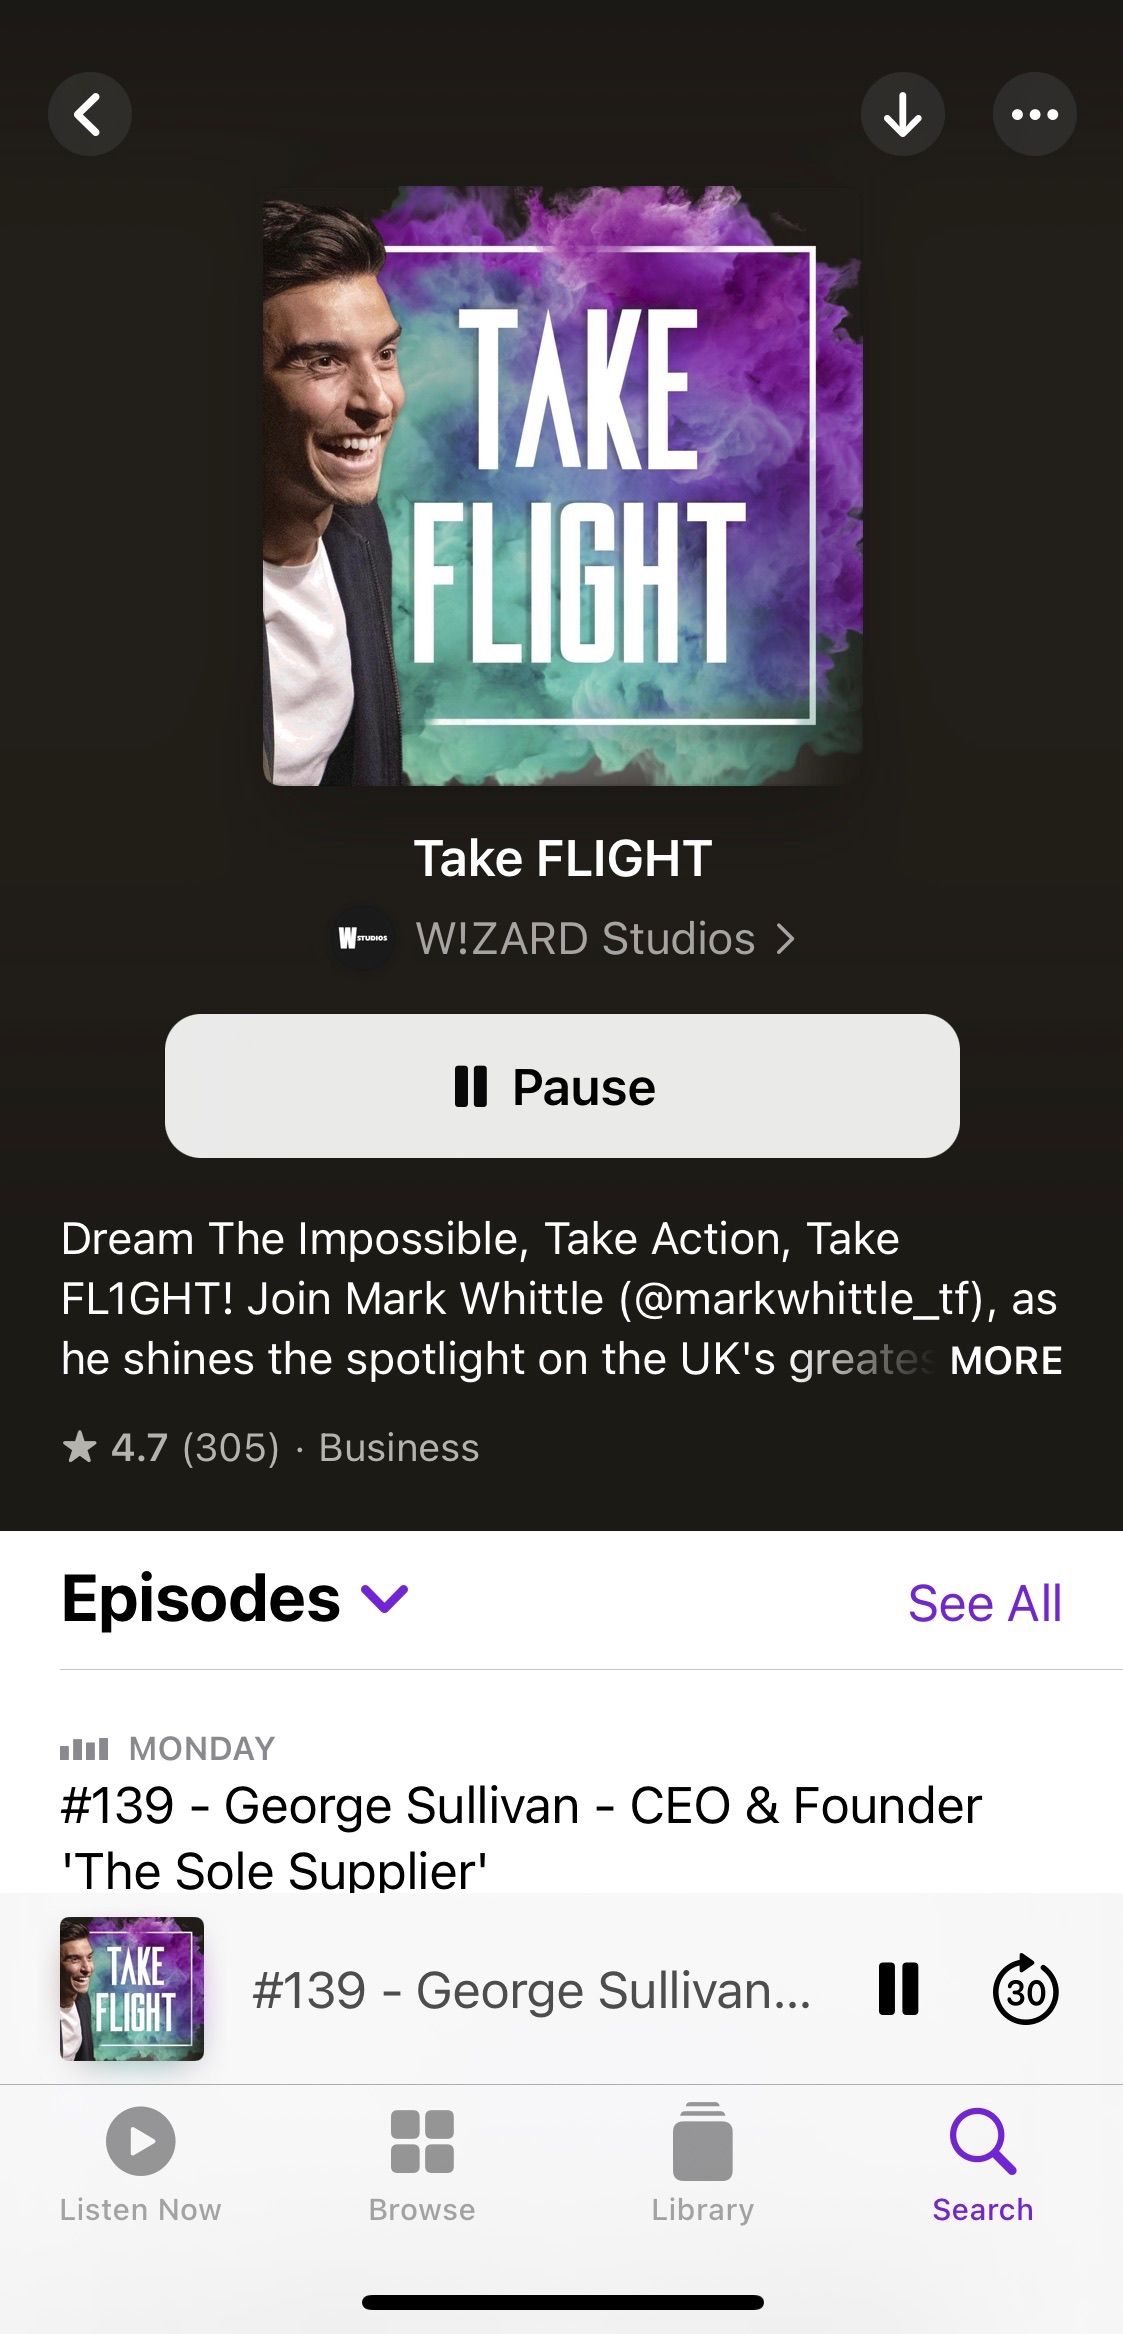 Screenshot showing title screen of Take Flight podcast